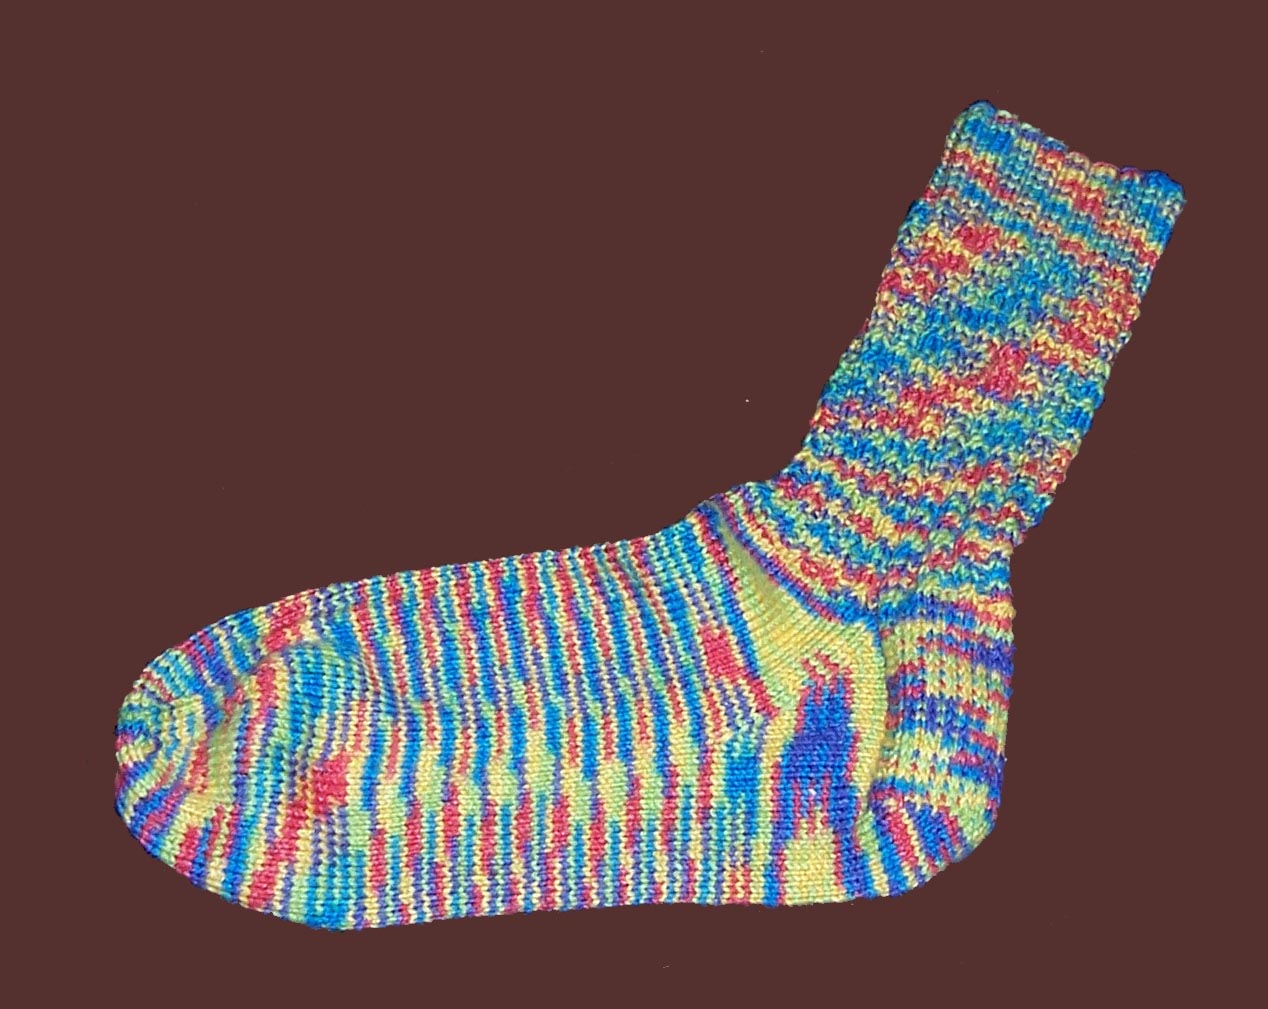 [Melissa+Grice's+sock.jpg]